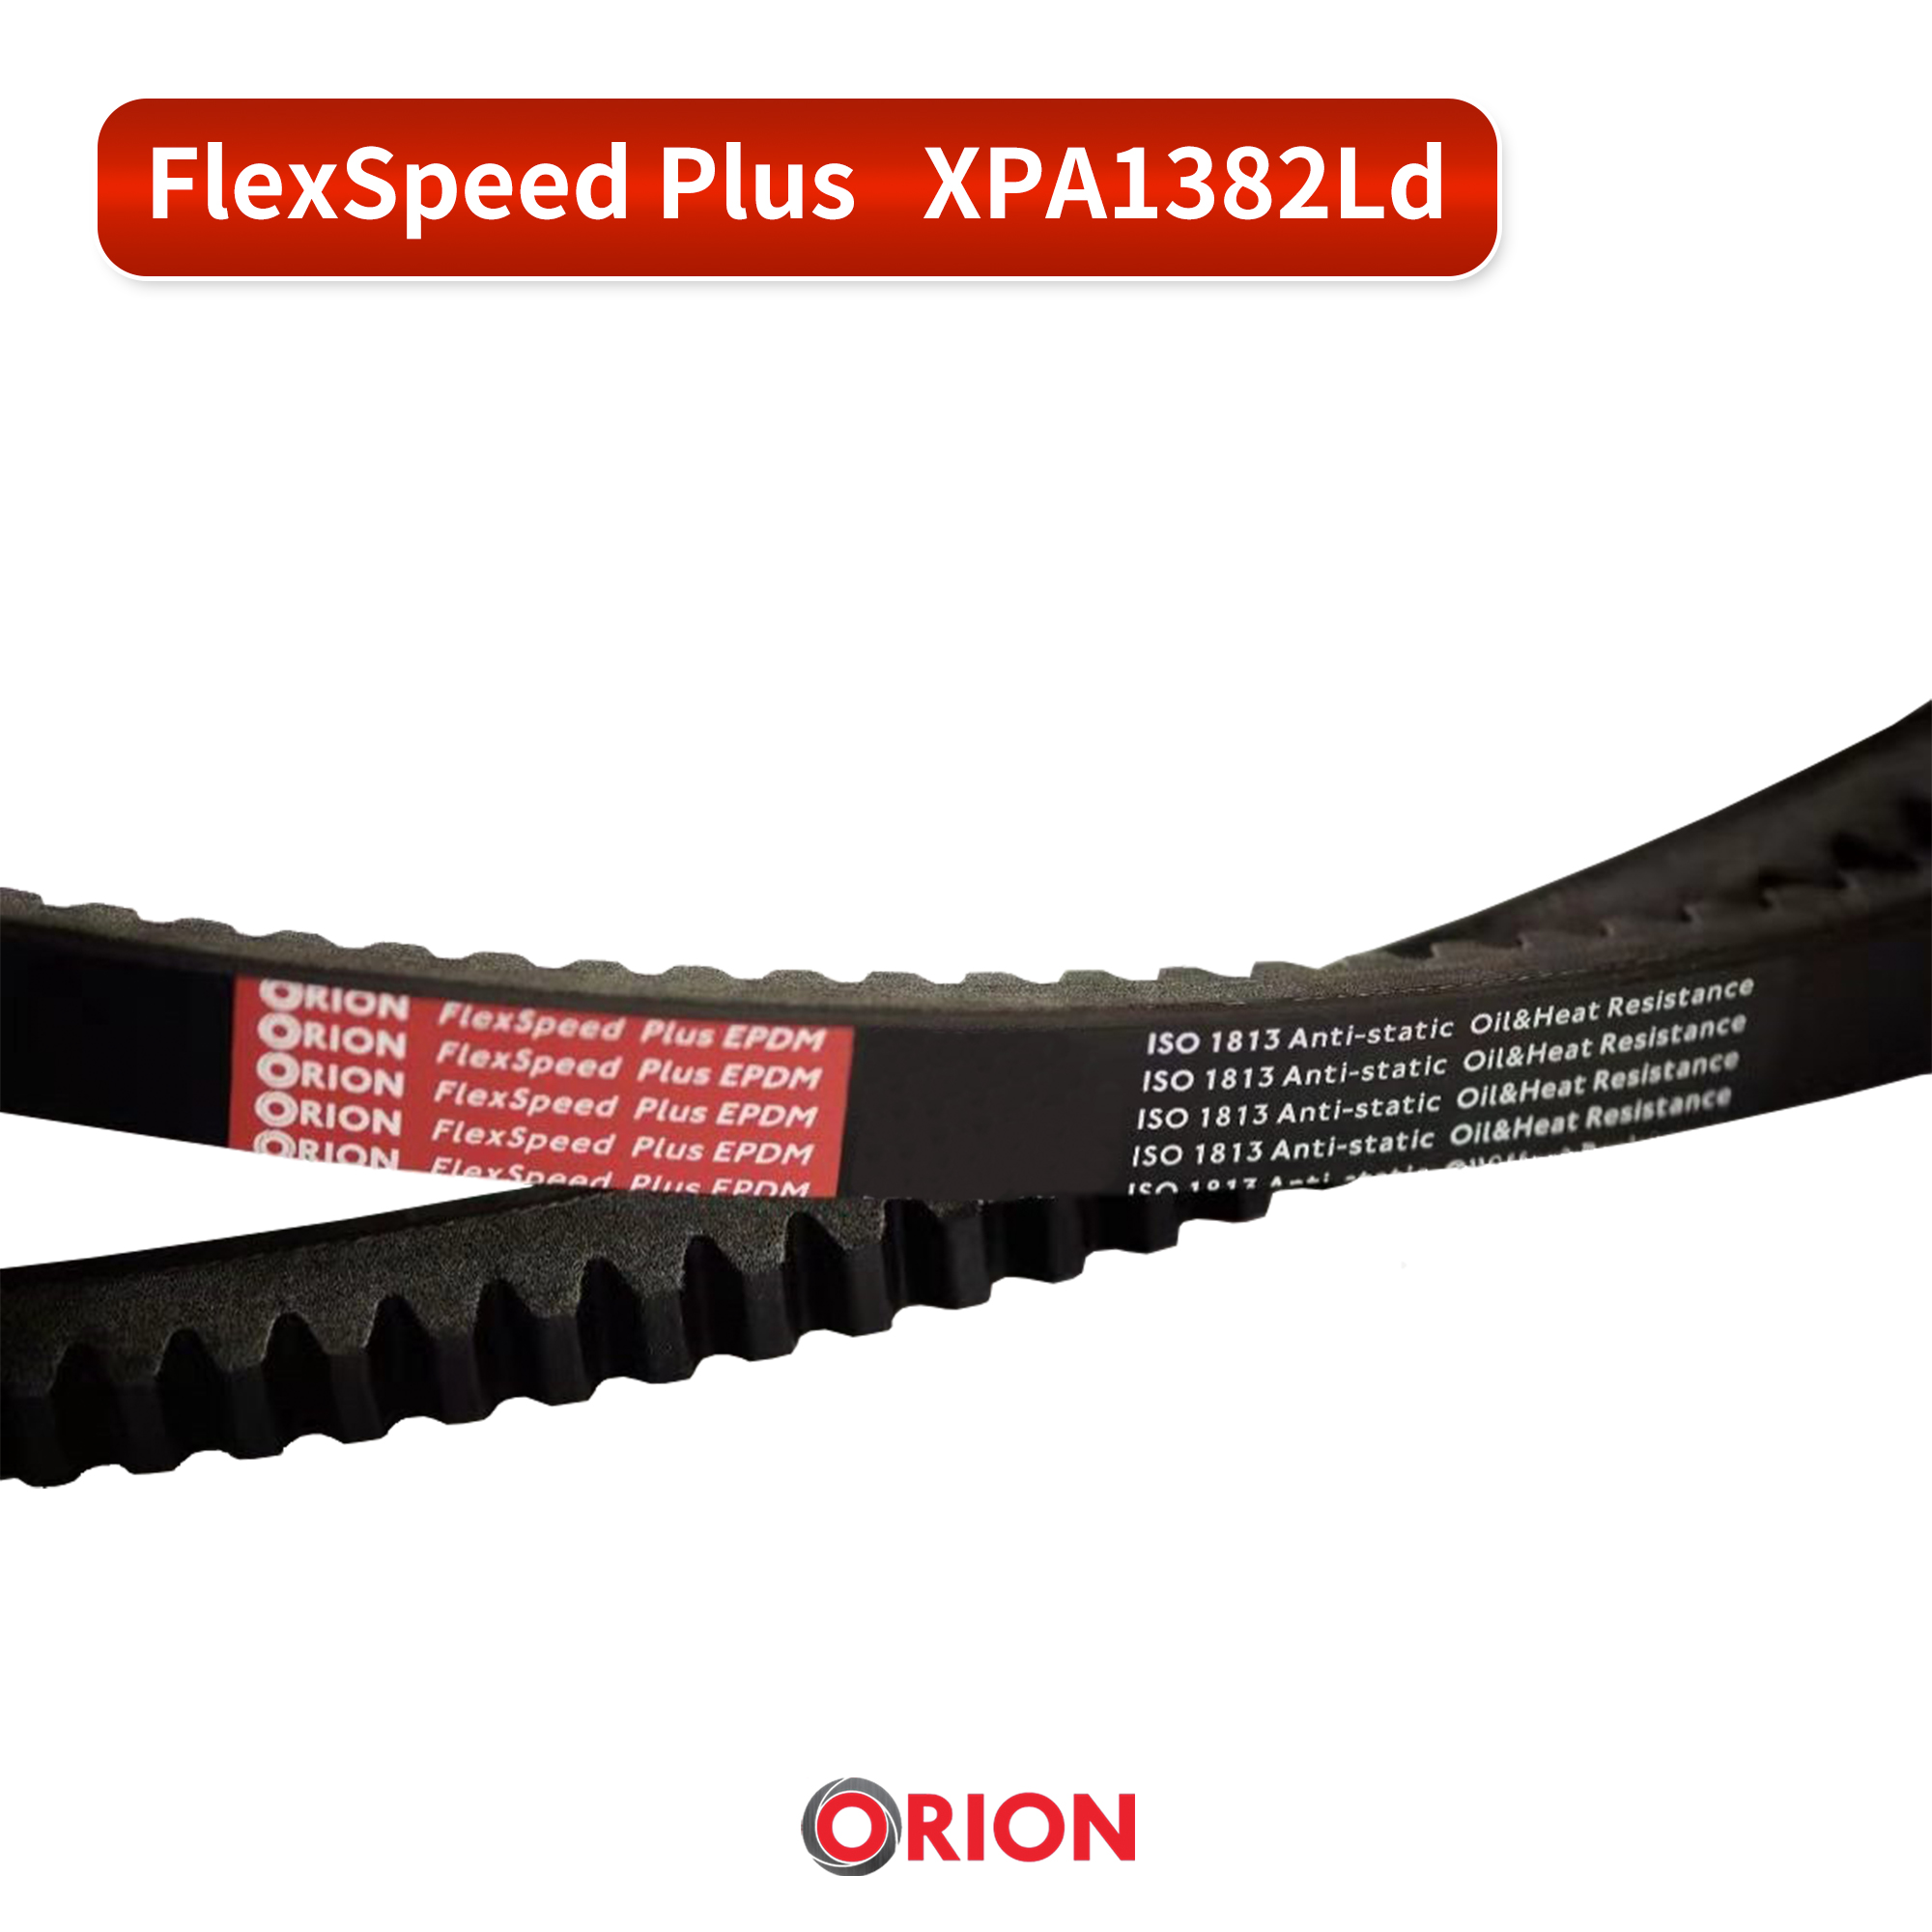 ORION FlexSpeed Plus XPA1382 Ld （红标）